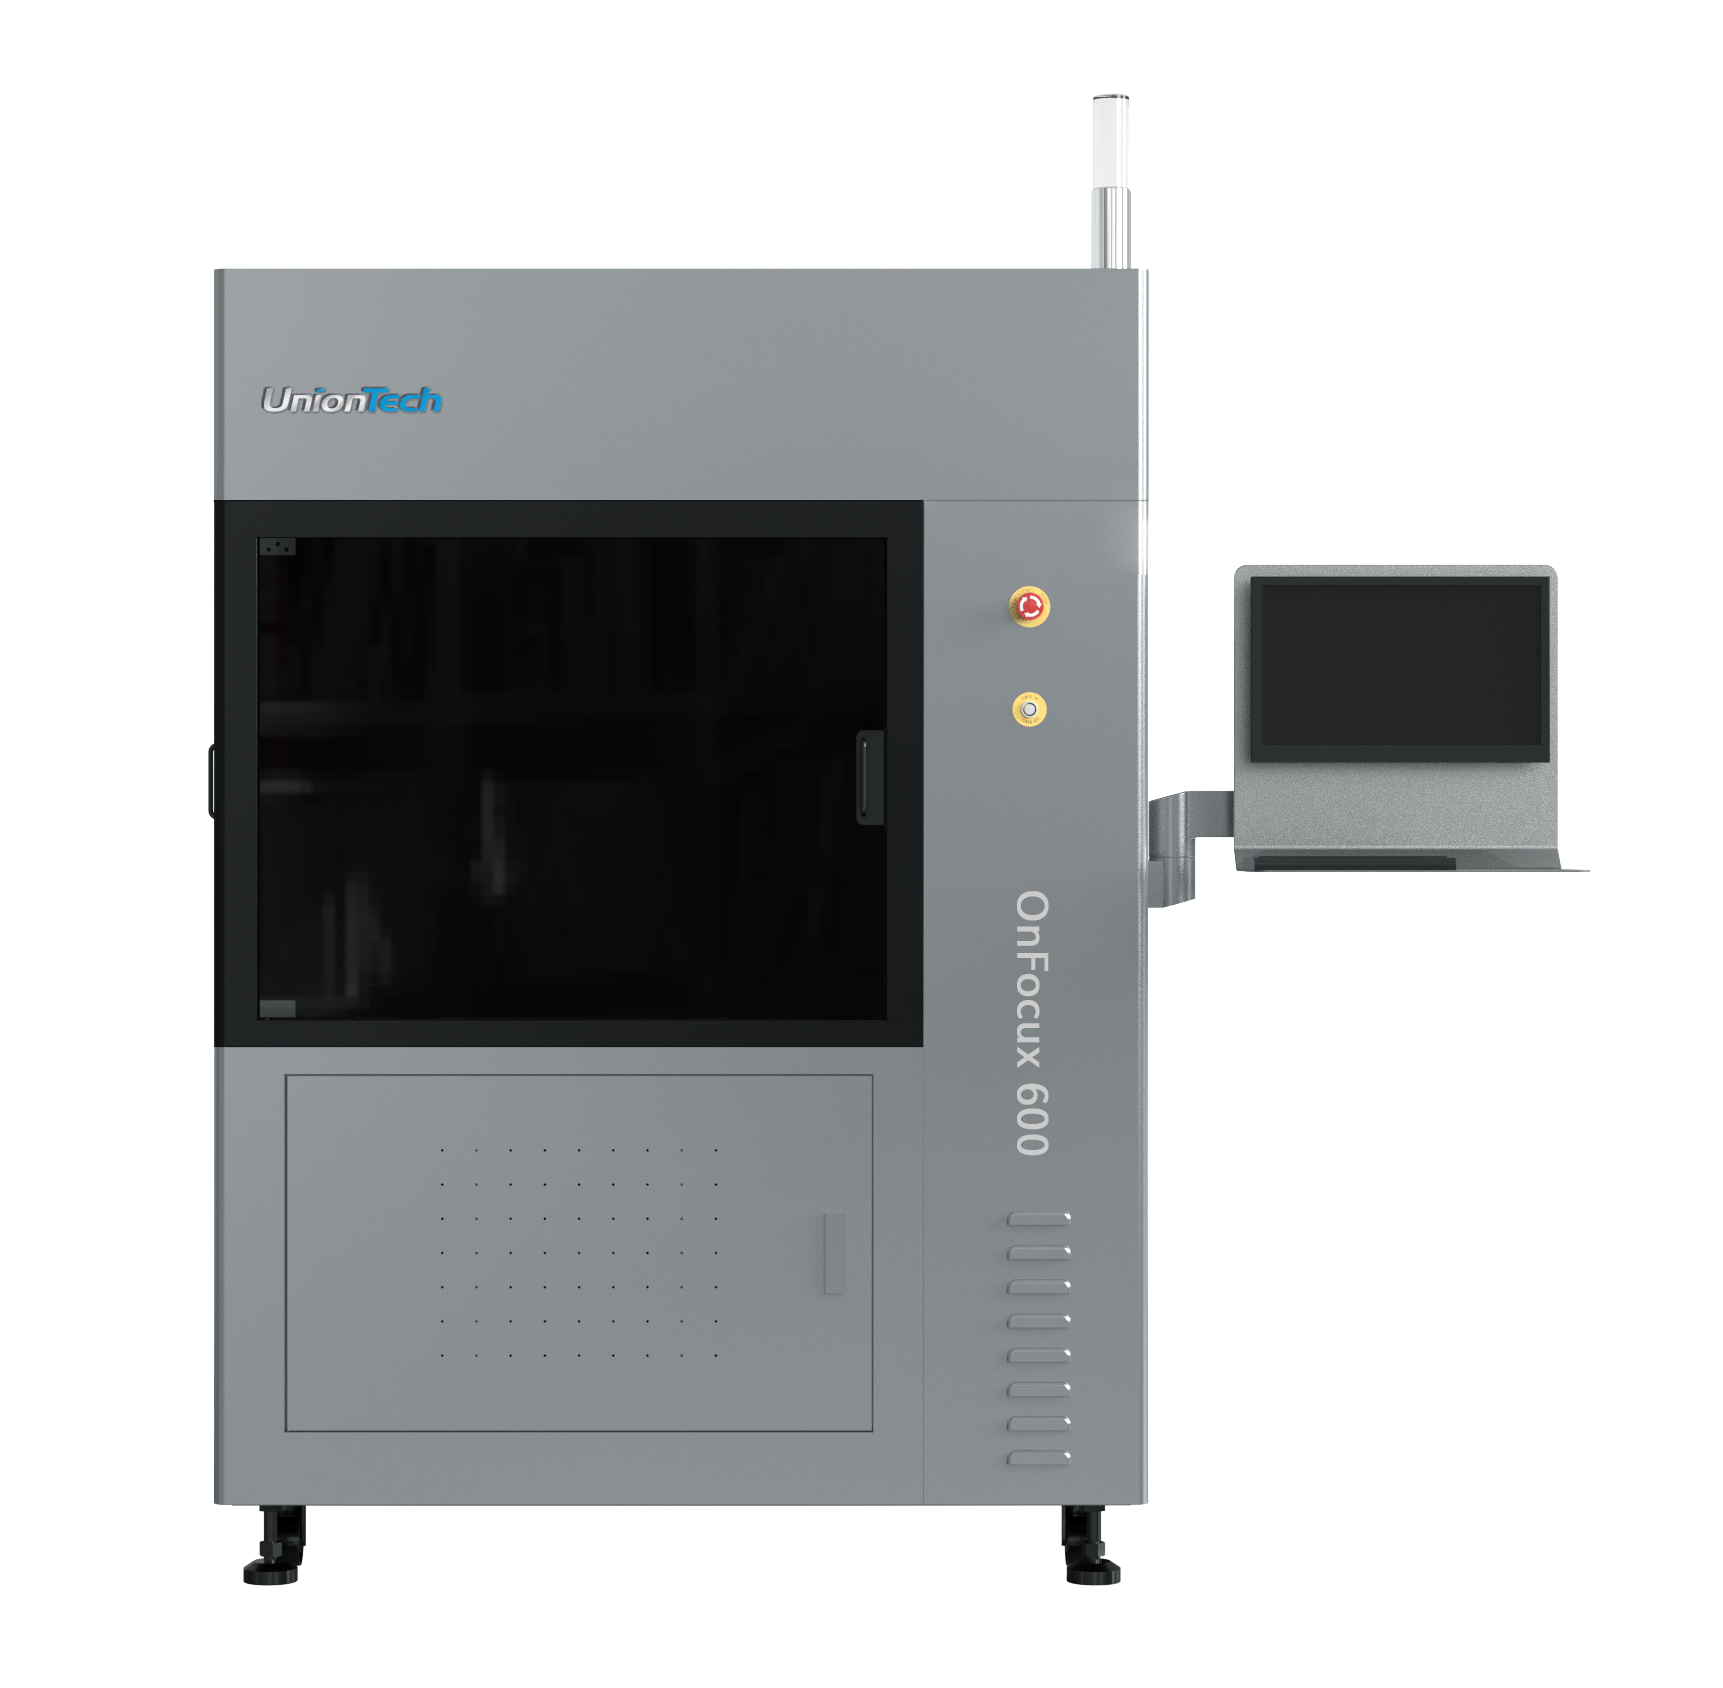 OnFocux600 Prototyping SLA 3D Printer